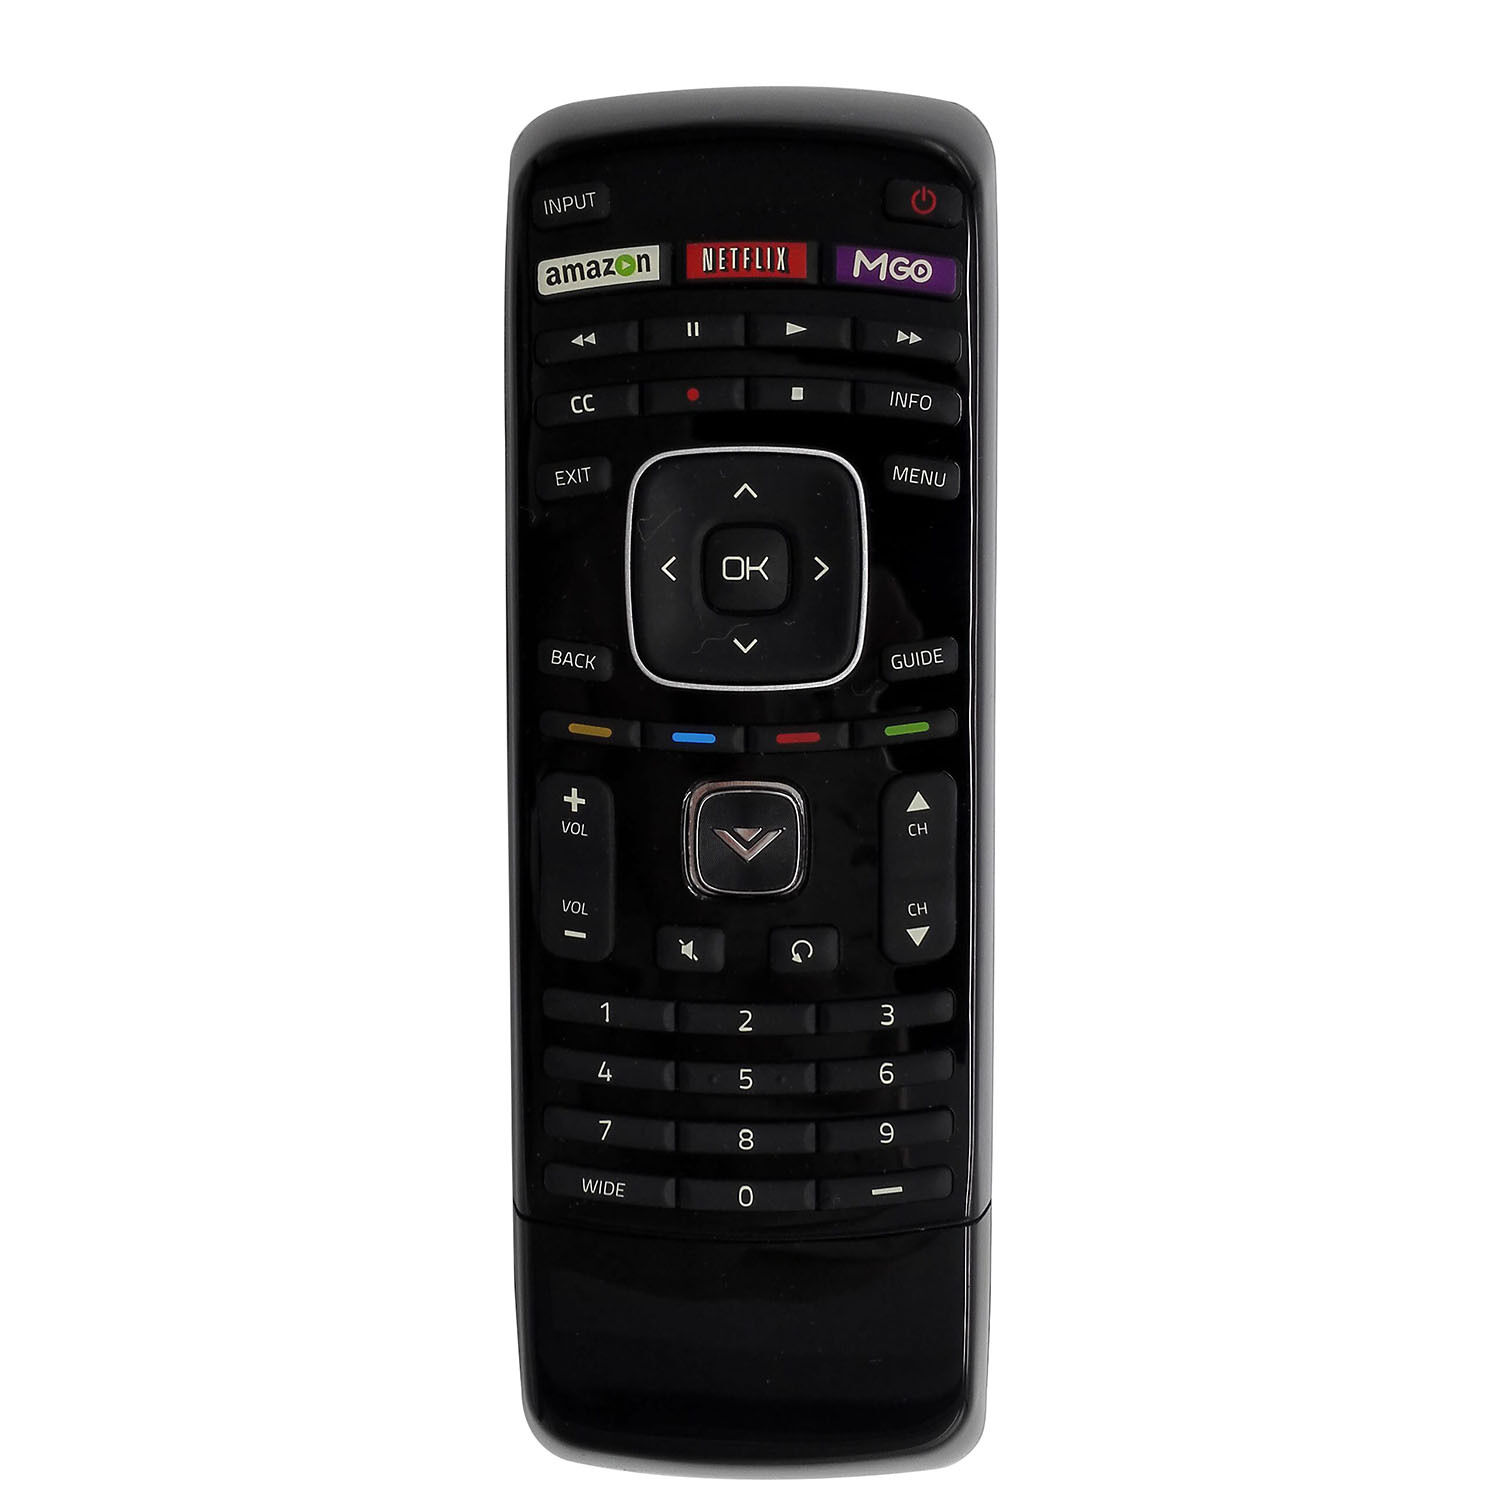 Brand New VIZIO XRT302 (XRT112 keyboard version) Remote for Smart TV with M-GO For-Vizio XRT302 - фотография #2